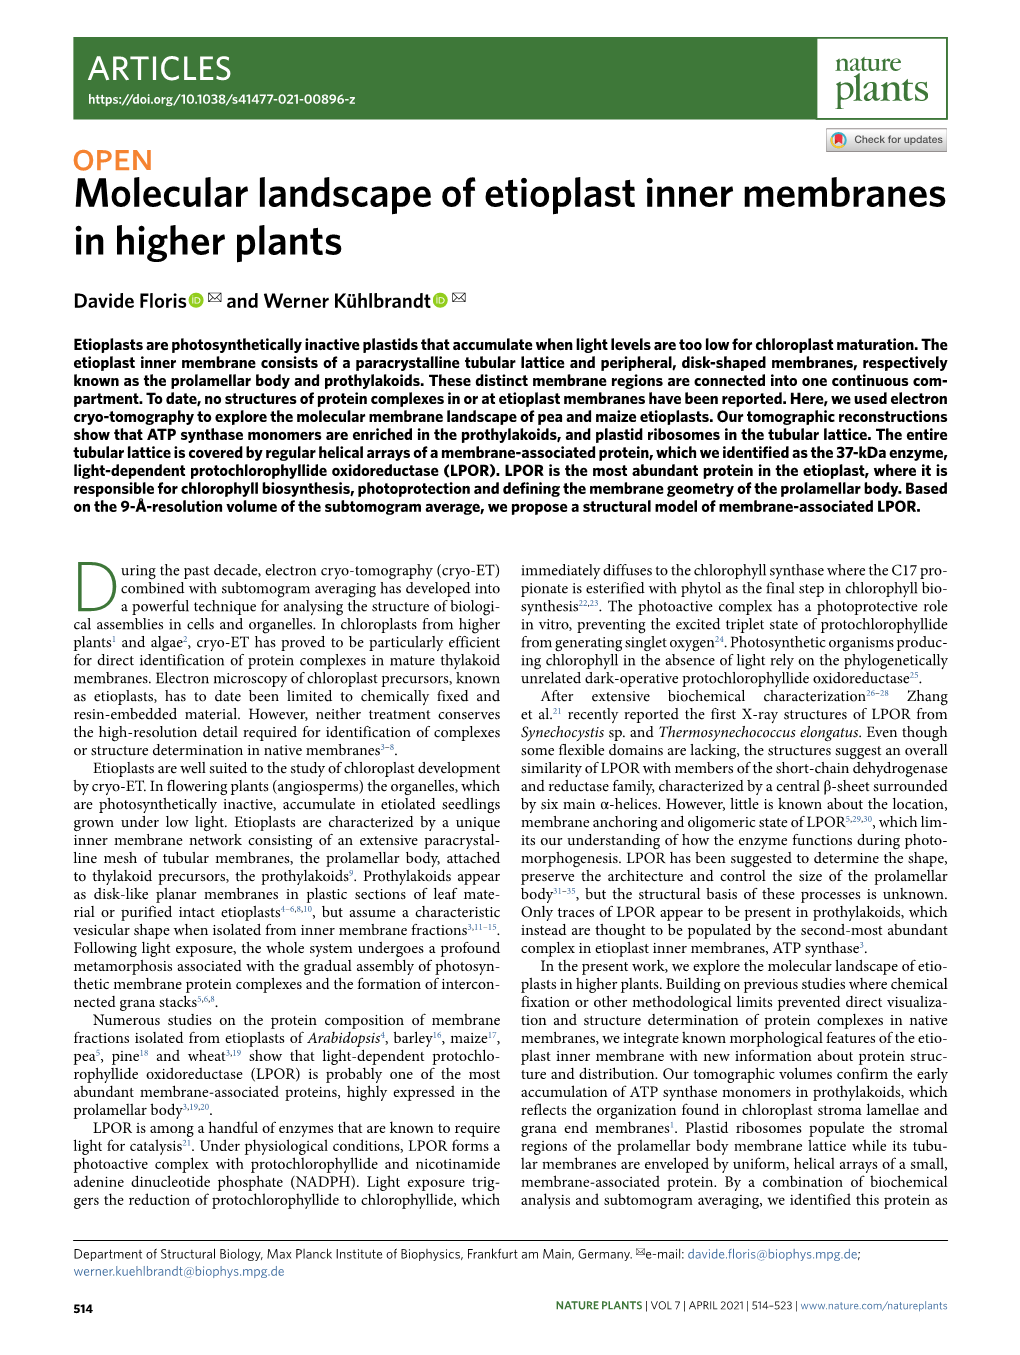 Molecular Landscape of Etioplast Inner Membranes in Higher Plants